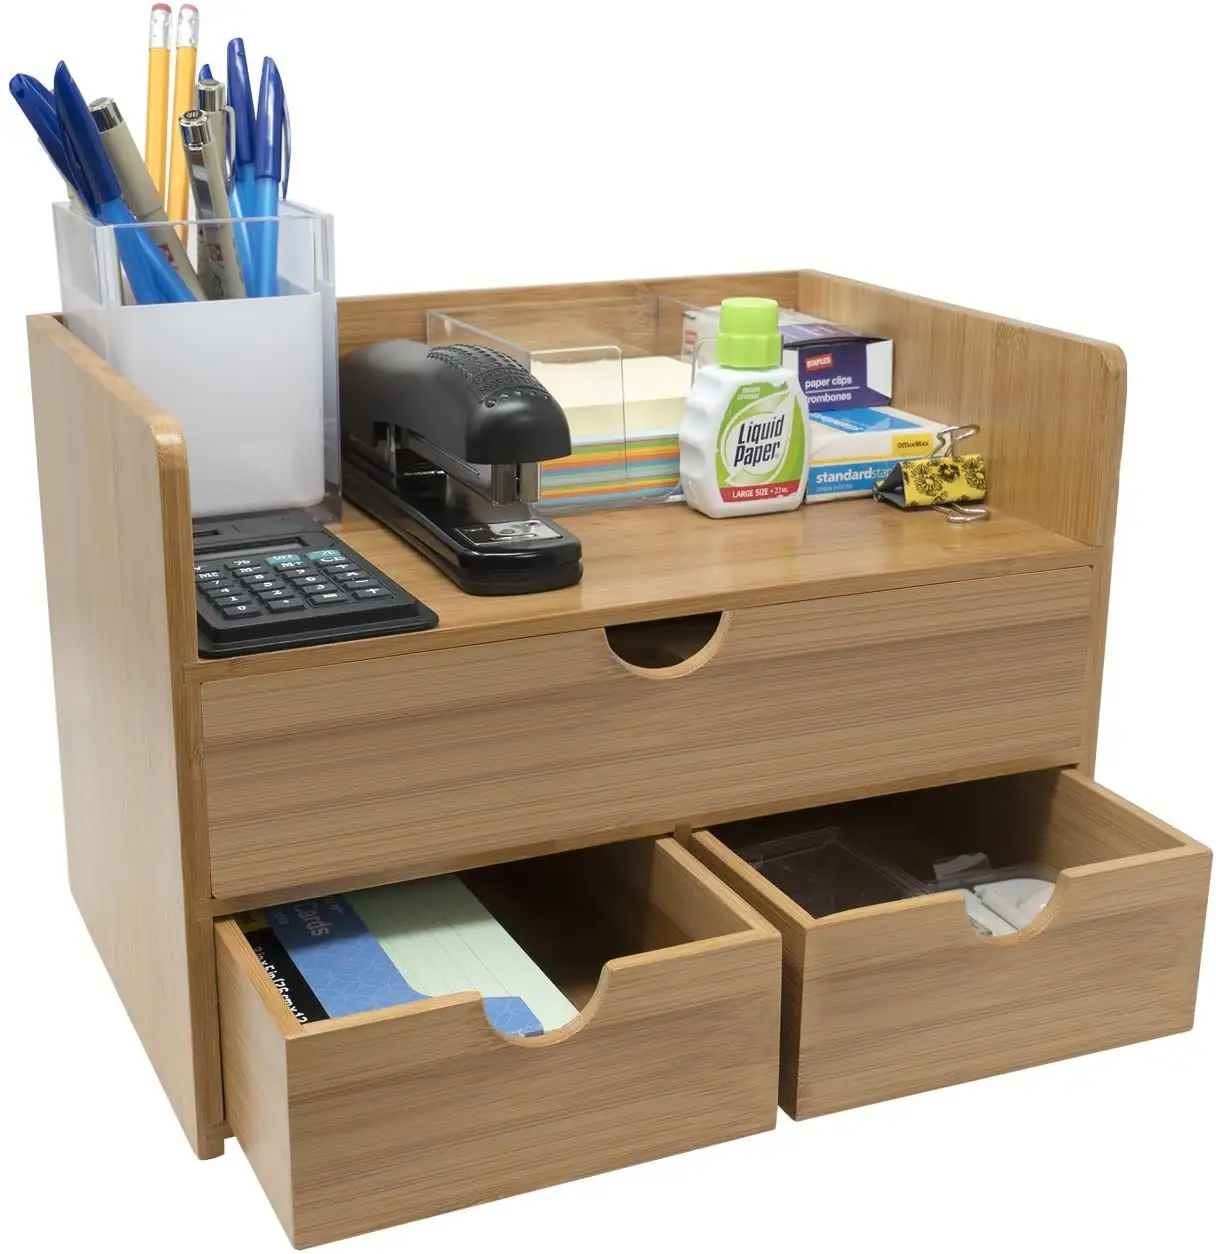 Wholesales Bamboo Box Bamboo Desk Organizer,Multifunctional Office Stationery Desktop Organizer